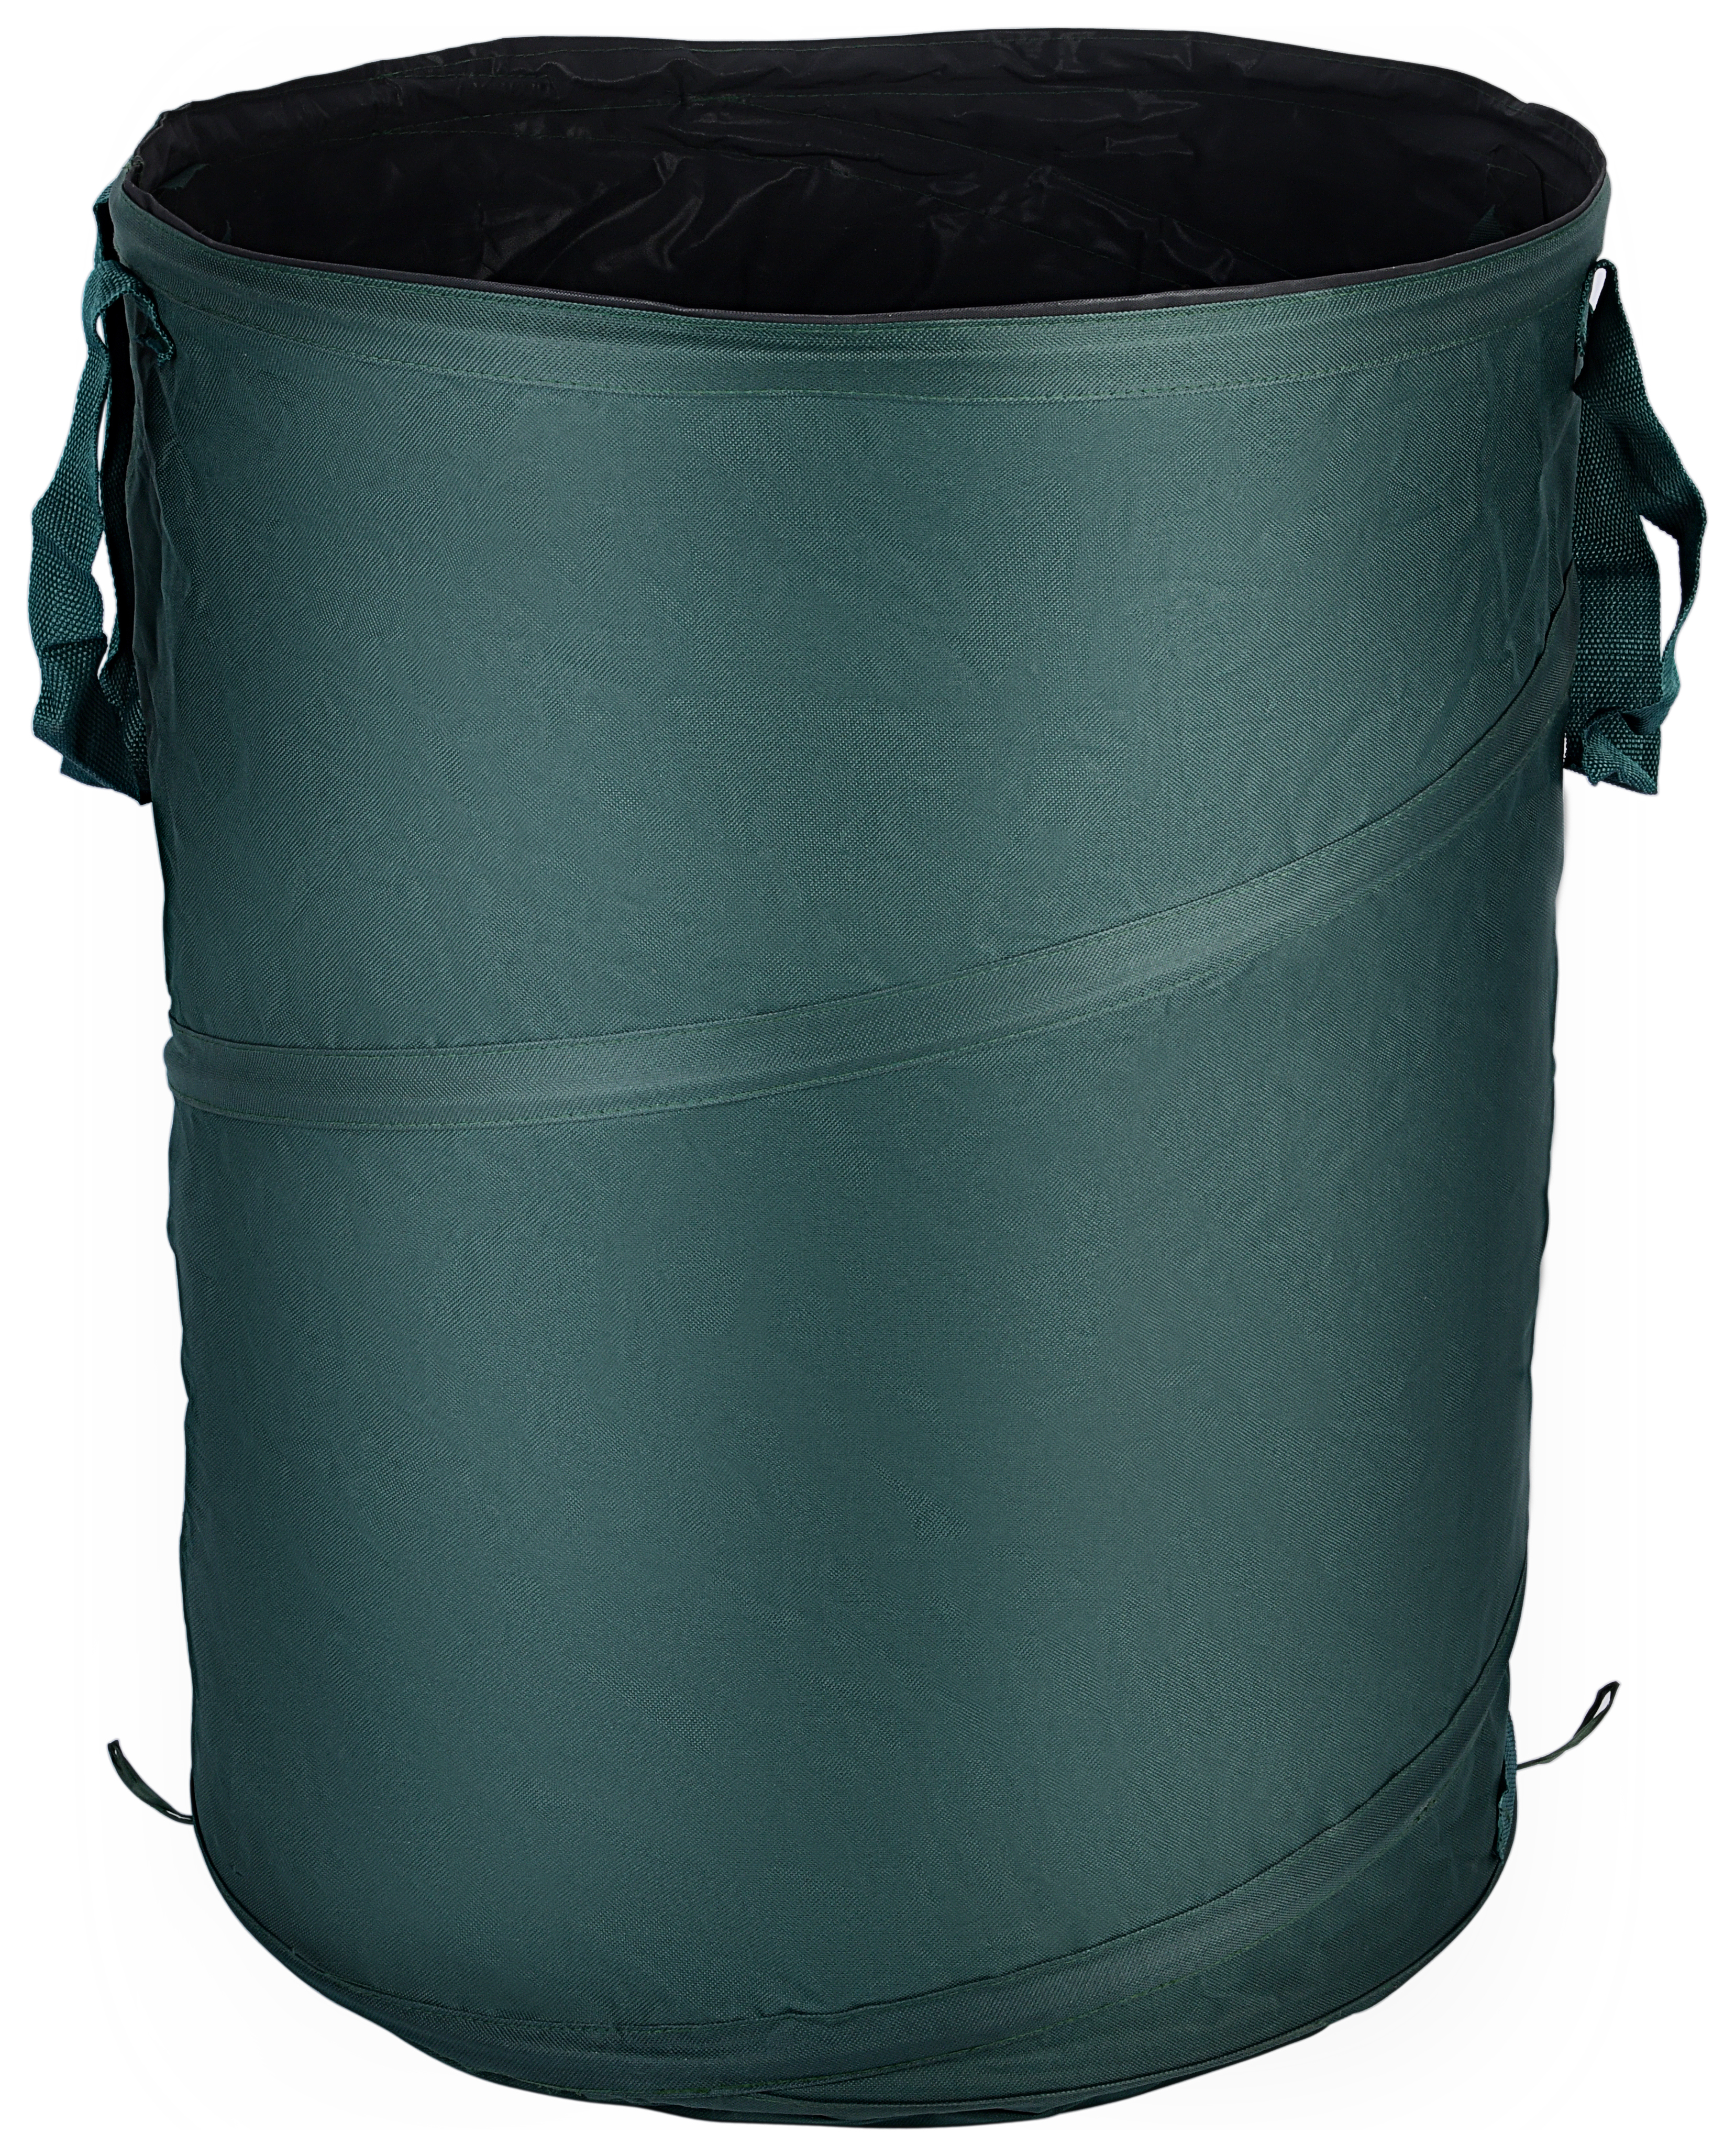 Wickes Green Pop-up Garden Waste Bag - 156L